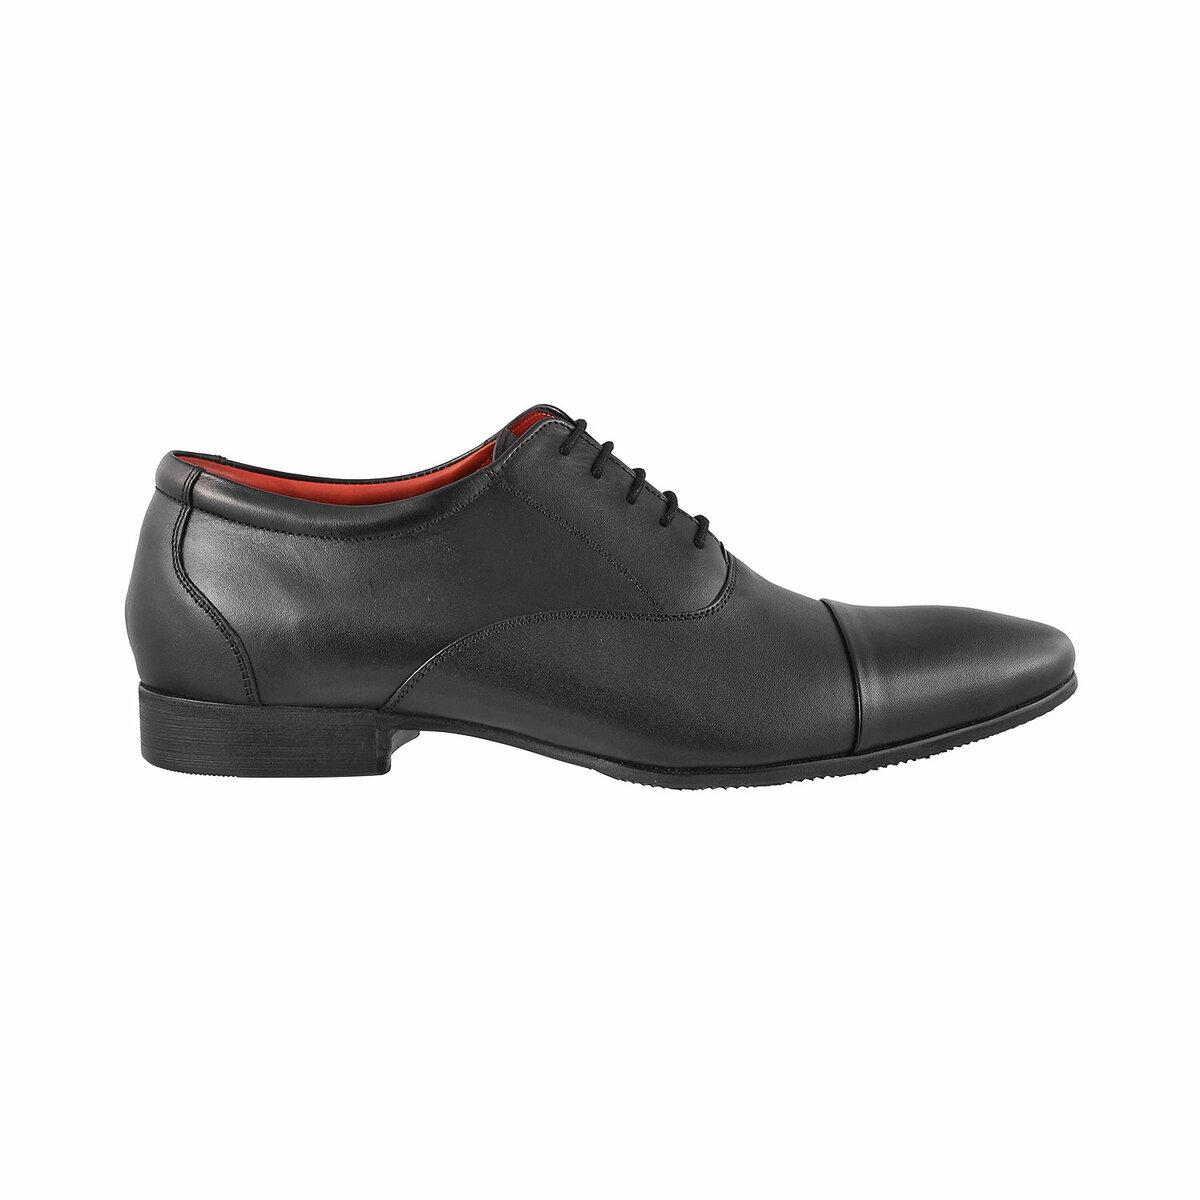 Buy Men Black Formal Oxford Online | SKU: 14-339-11-40-Metro Shoes